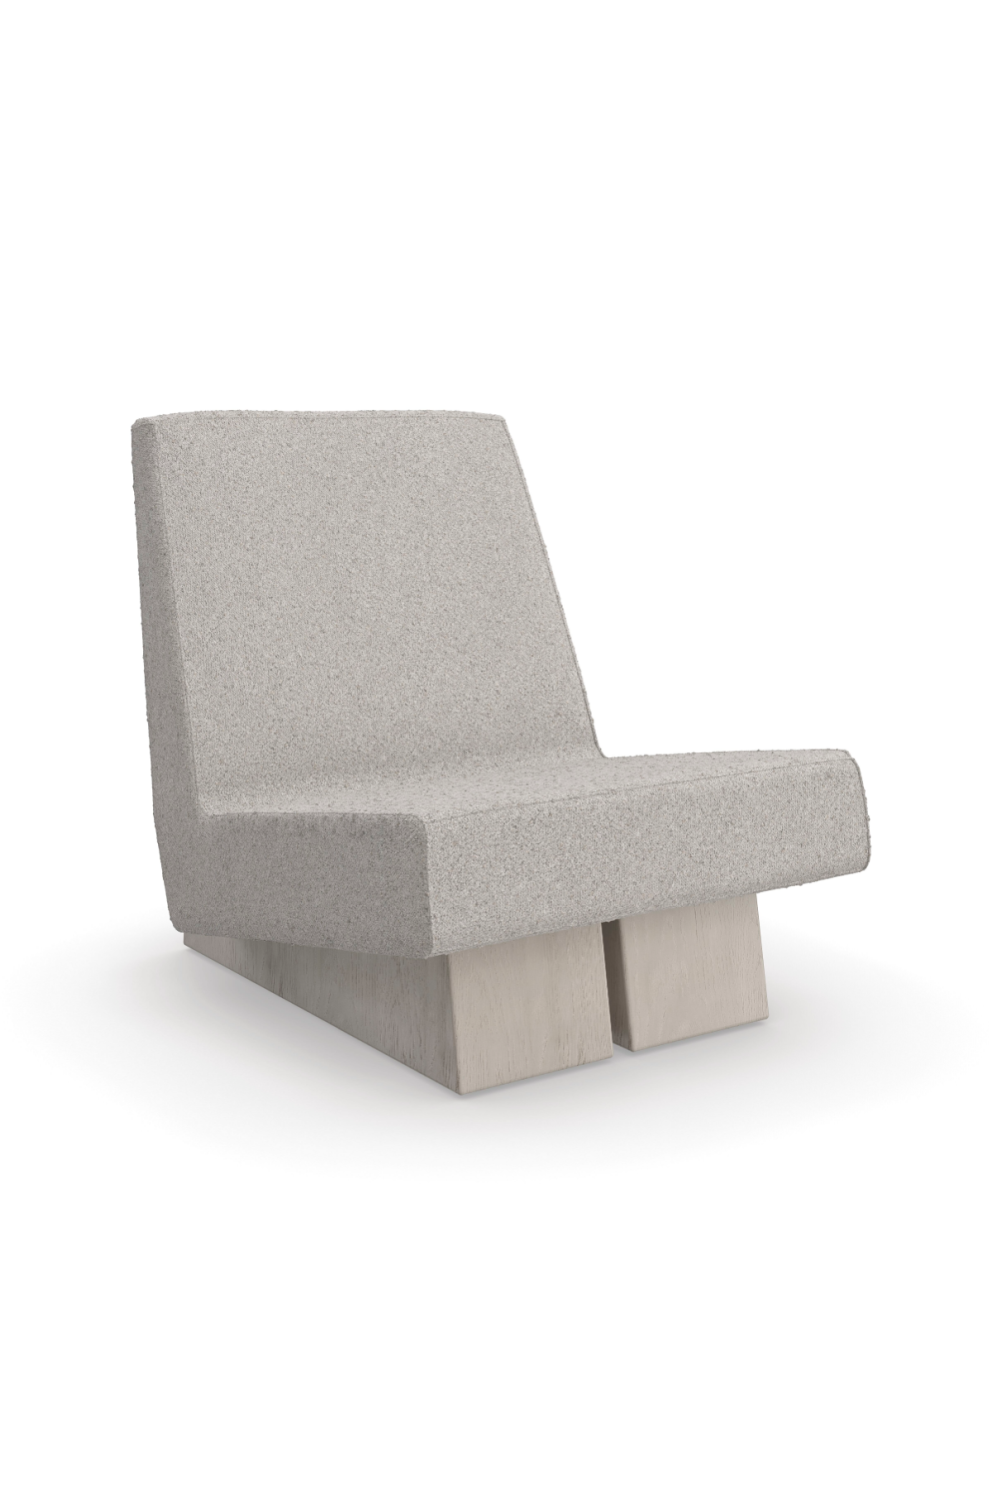 Gray Bouclé Modern Accent Chair | Caracole Indi | Oroa.com